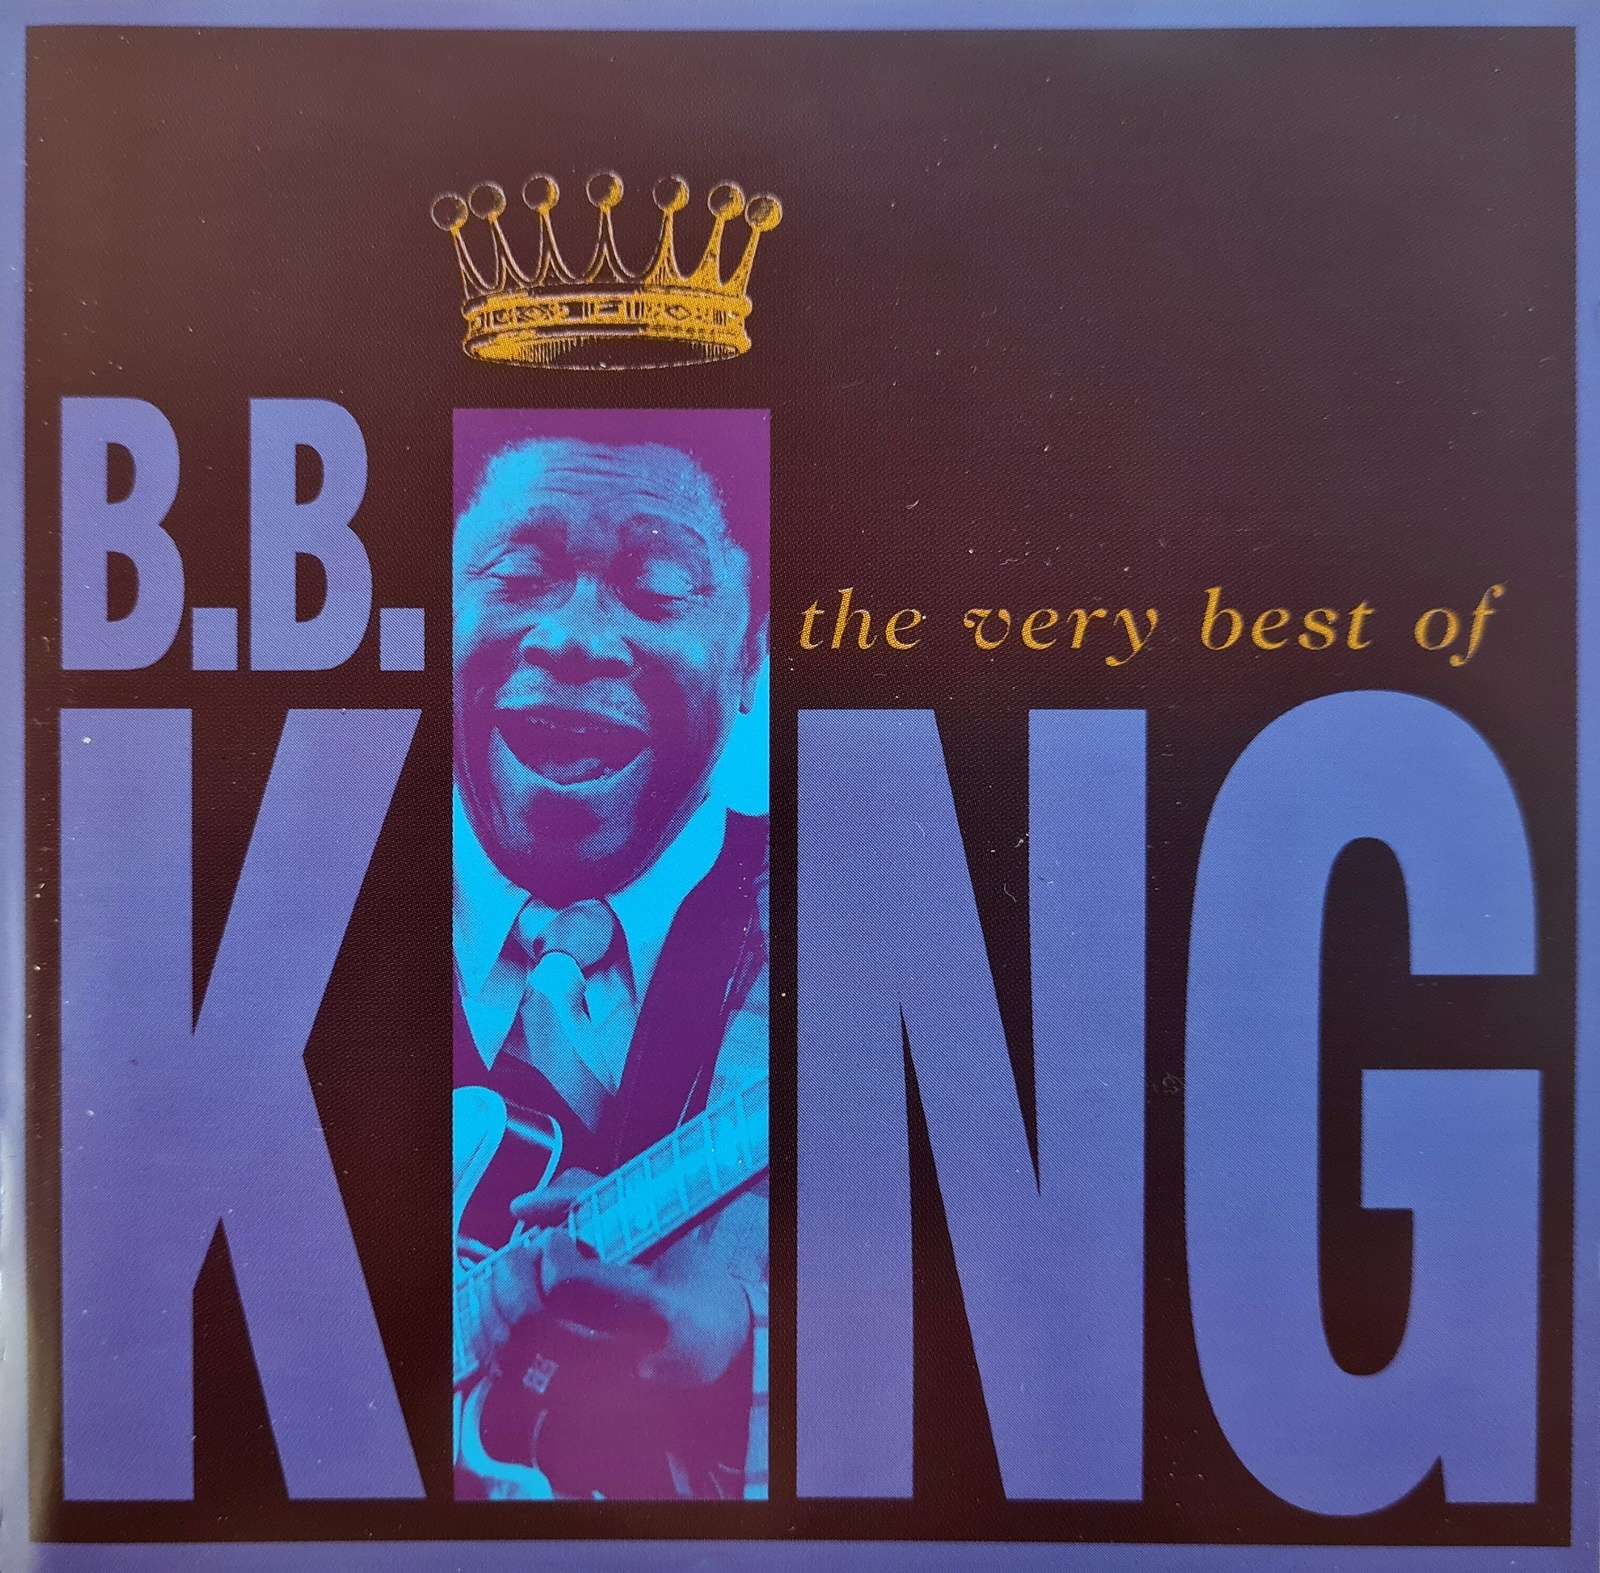 B.B. King - The Very Best of (CD)